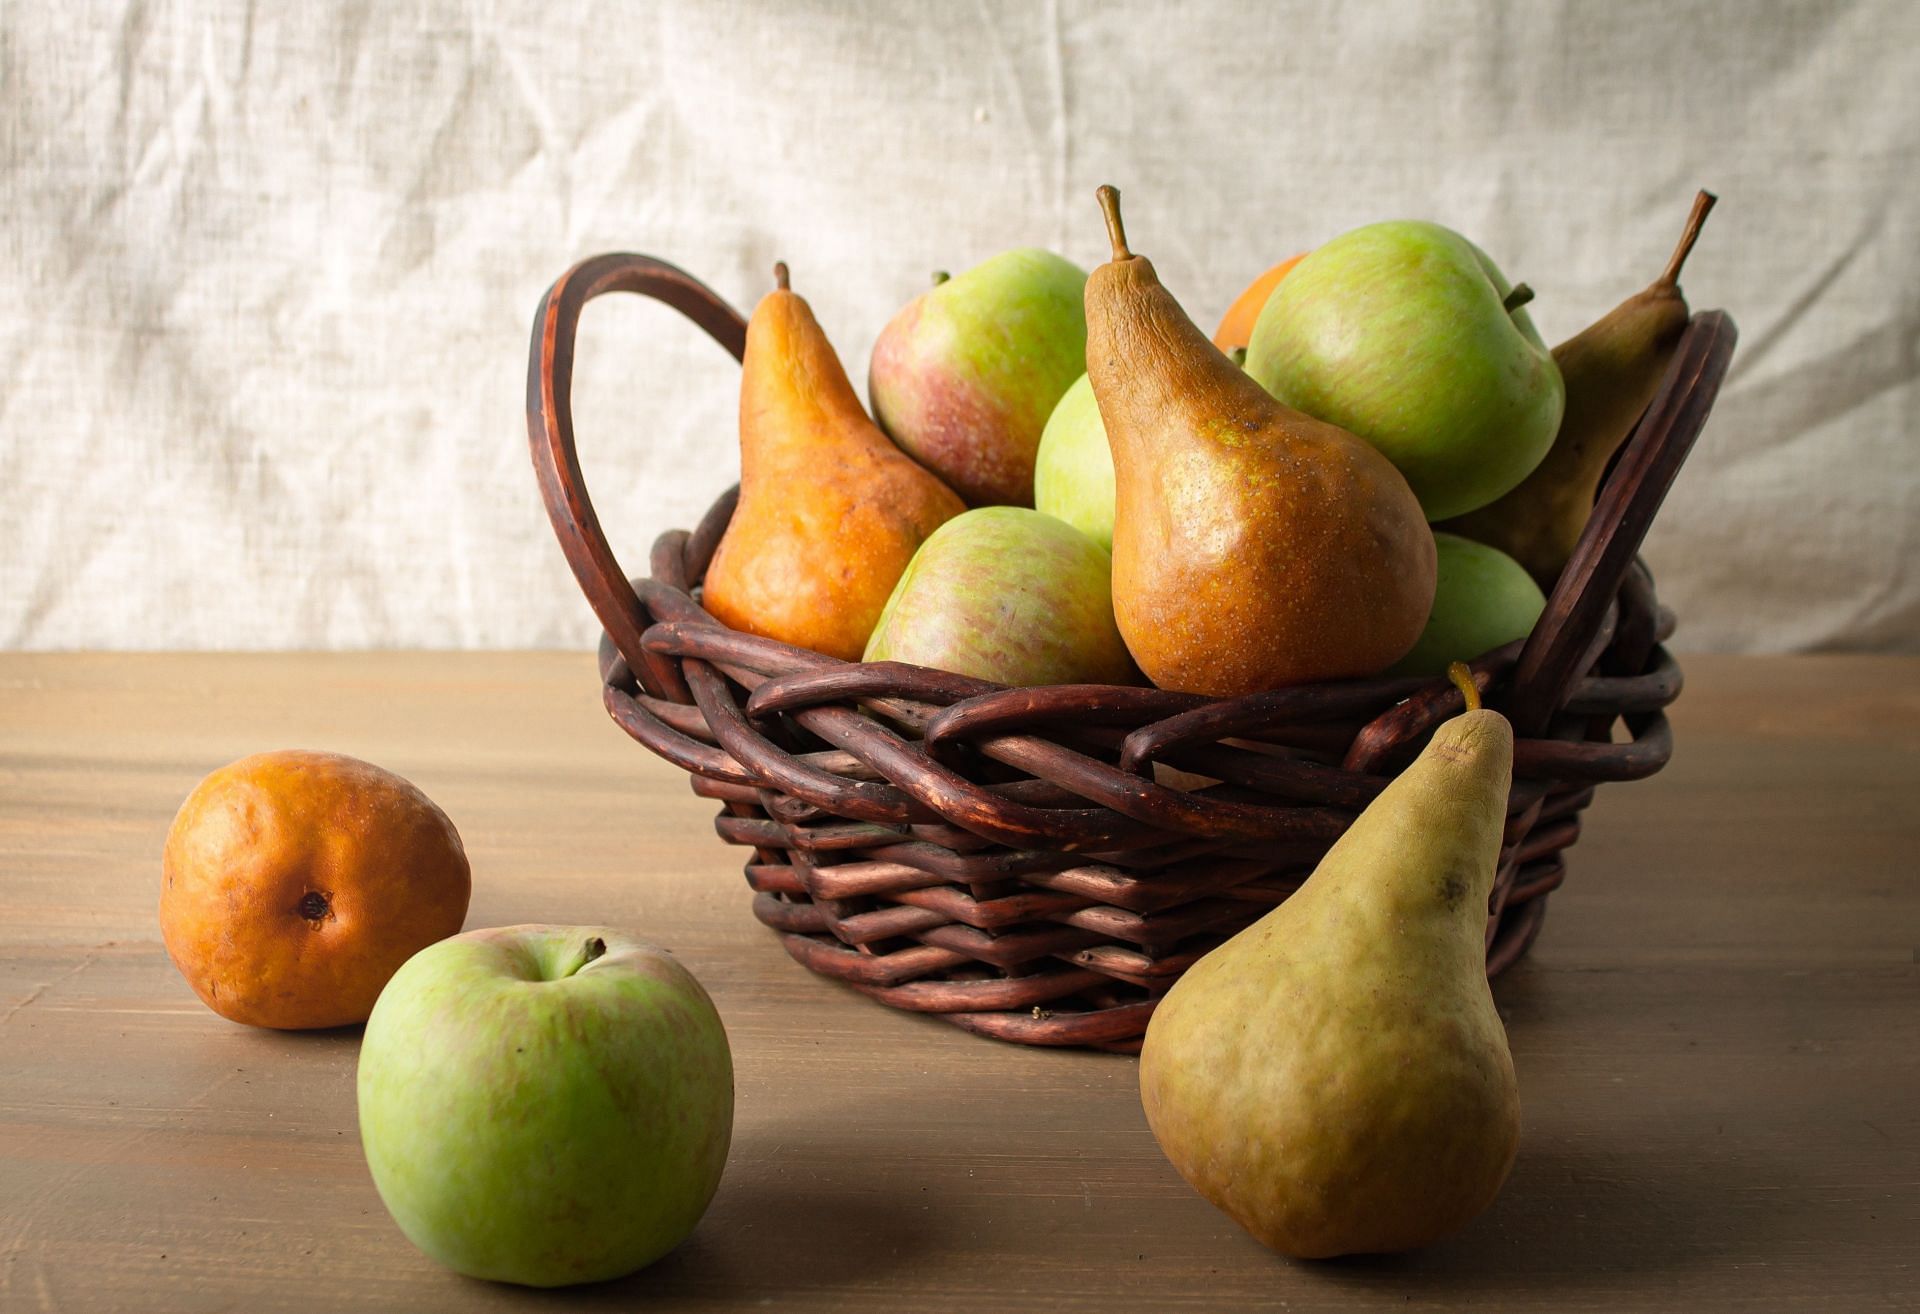 Fruits contain anti-inflammatory compounds (Image via Unsplash/Quin Engle)